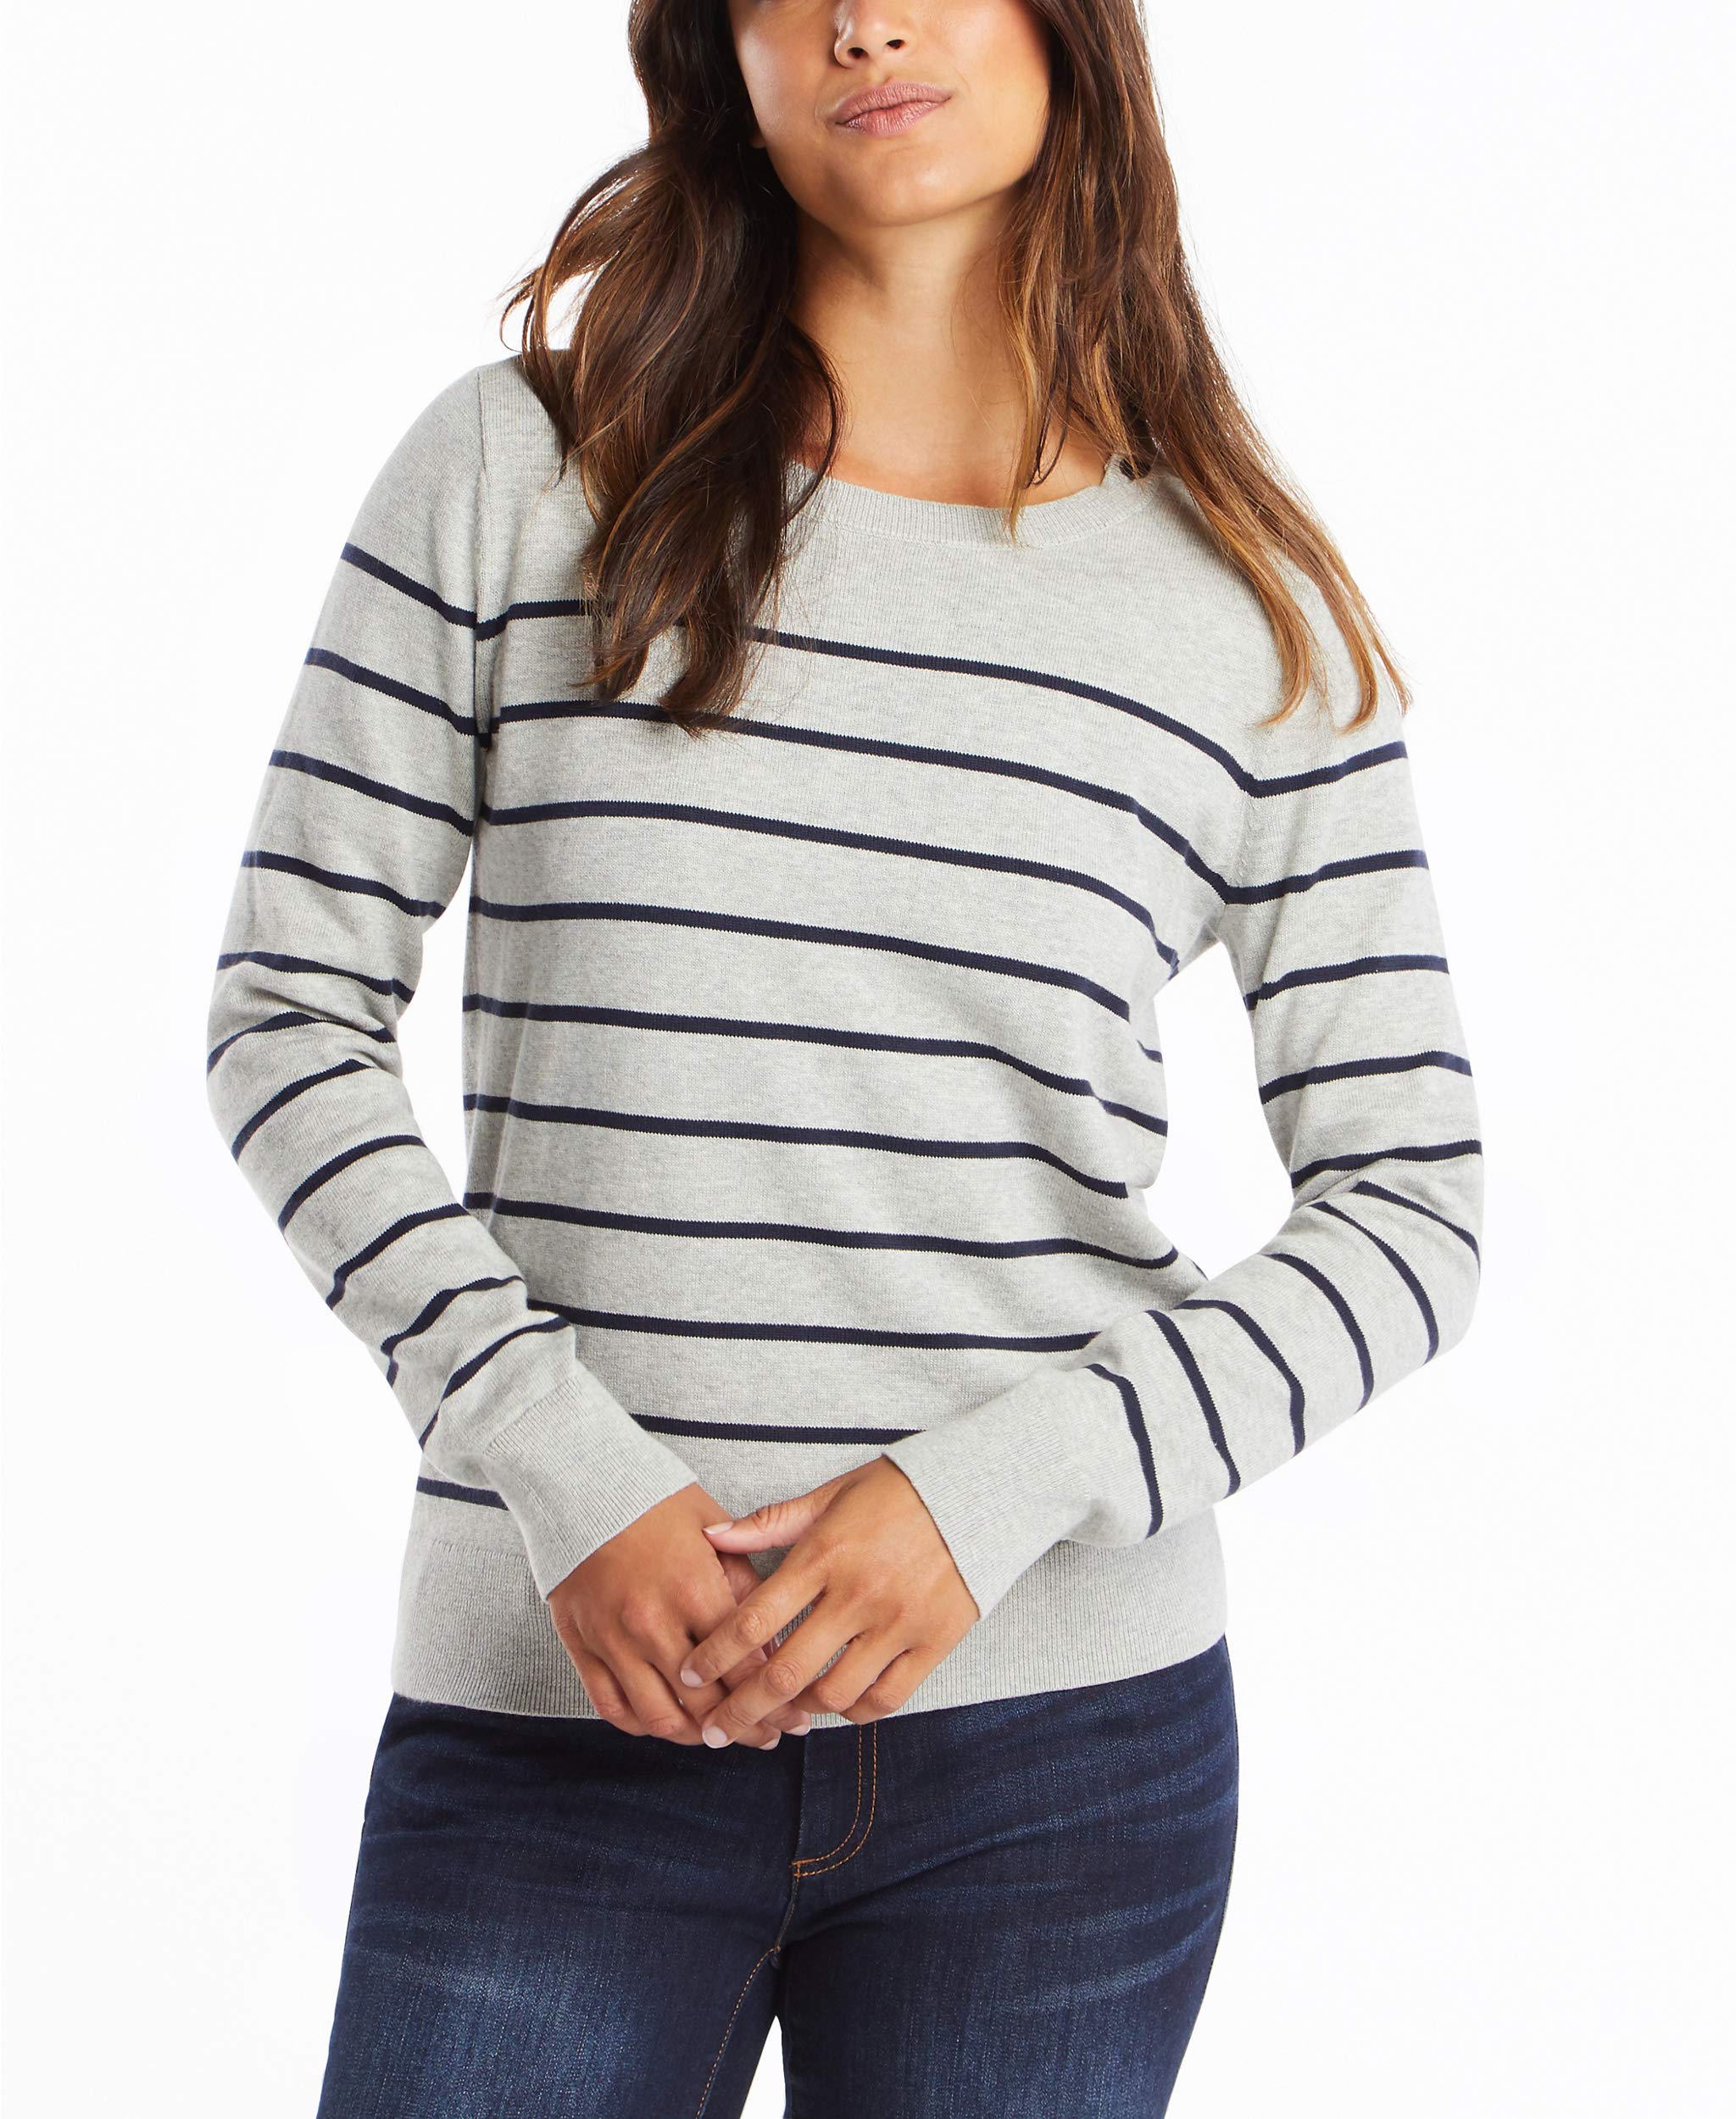 Nautica Women's Year-Round Long Sleeve 100% Cotton Striped Crewneck Sweater